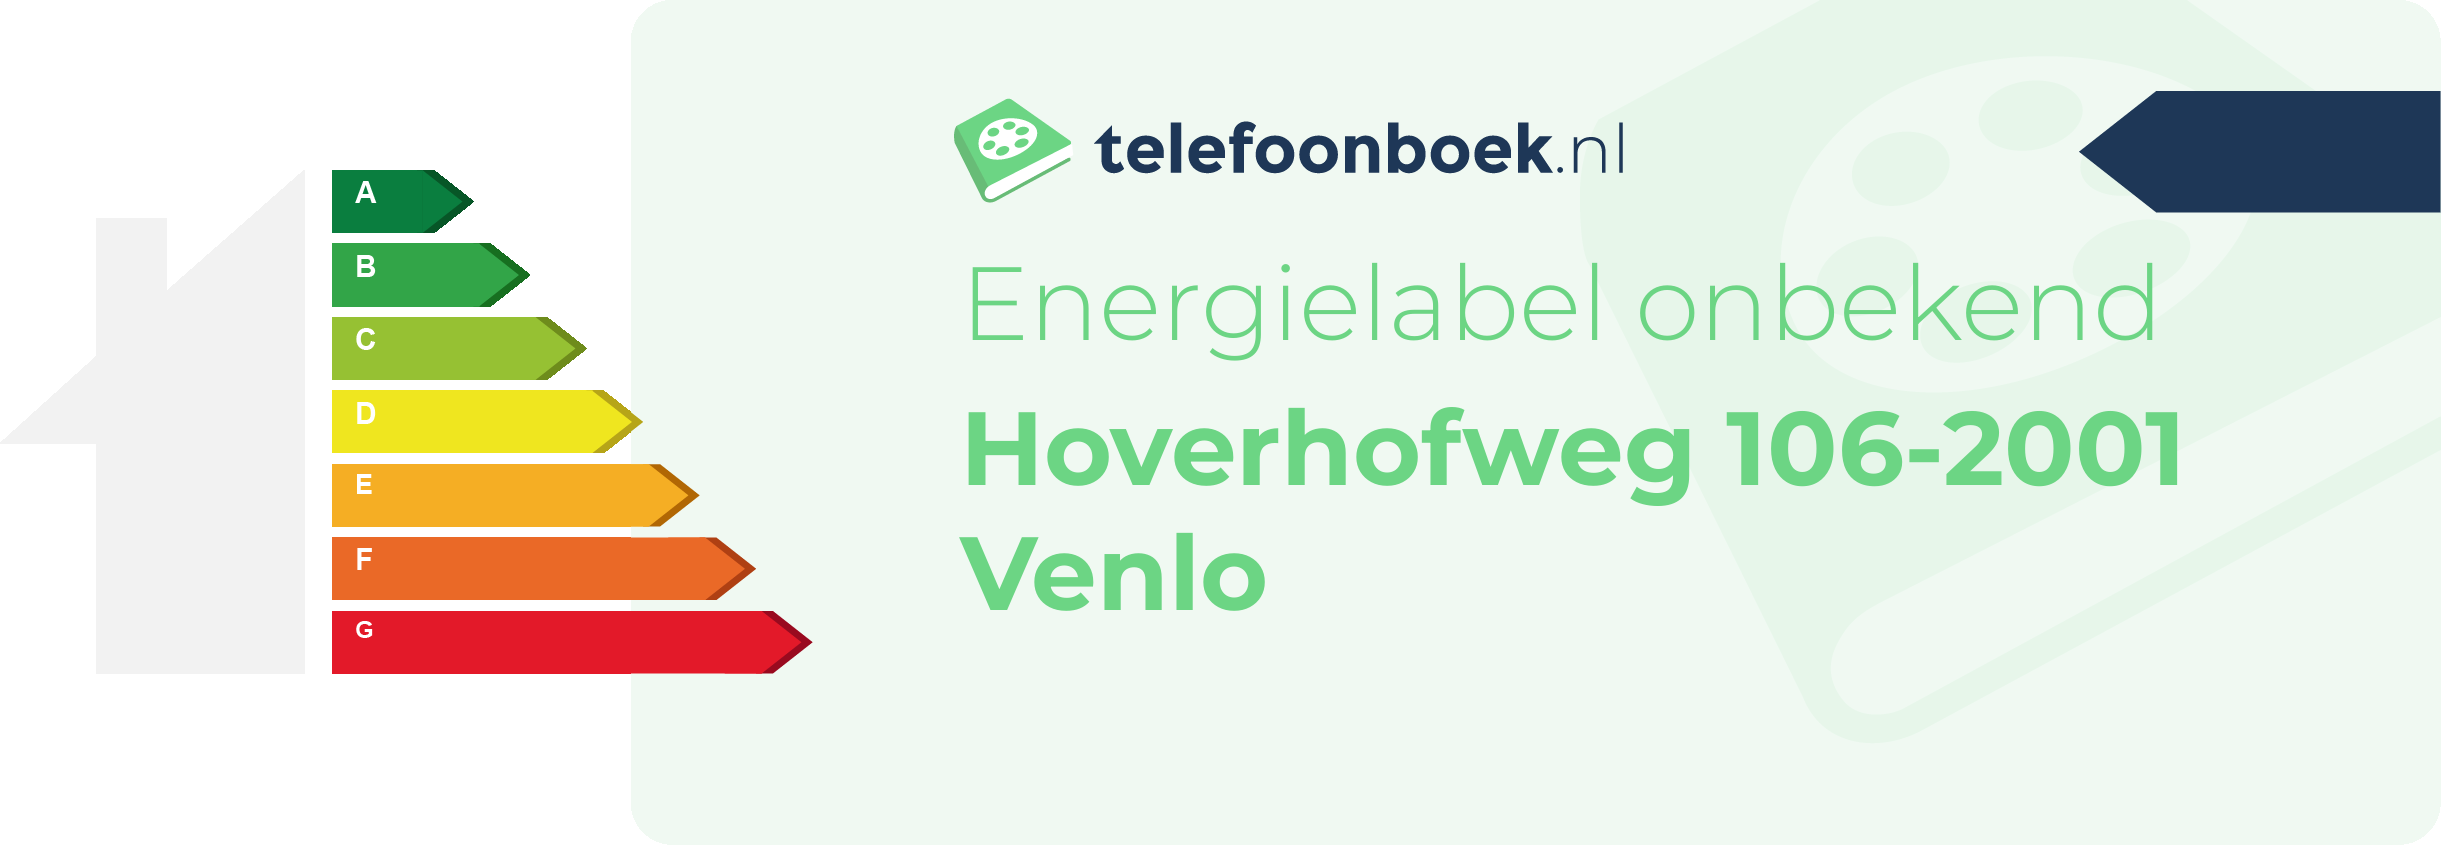 Energielabel Hoverhofweg 106-2001 Venlo